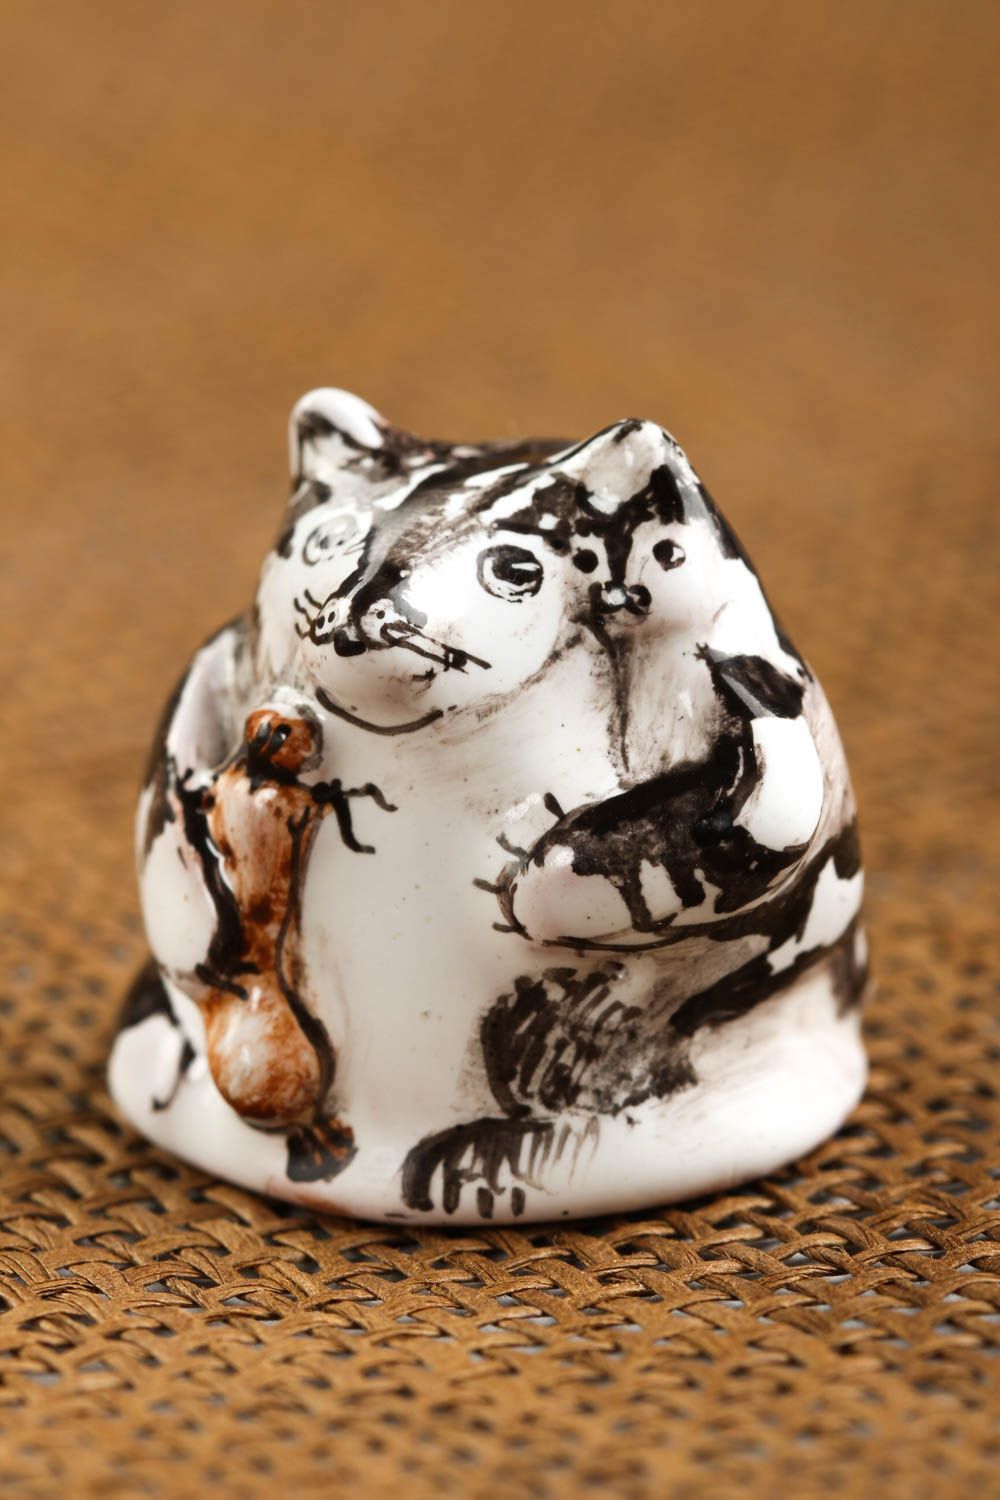 Handmade collectible thimble ceramic decorative use only animal figurine photo 1